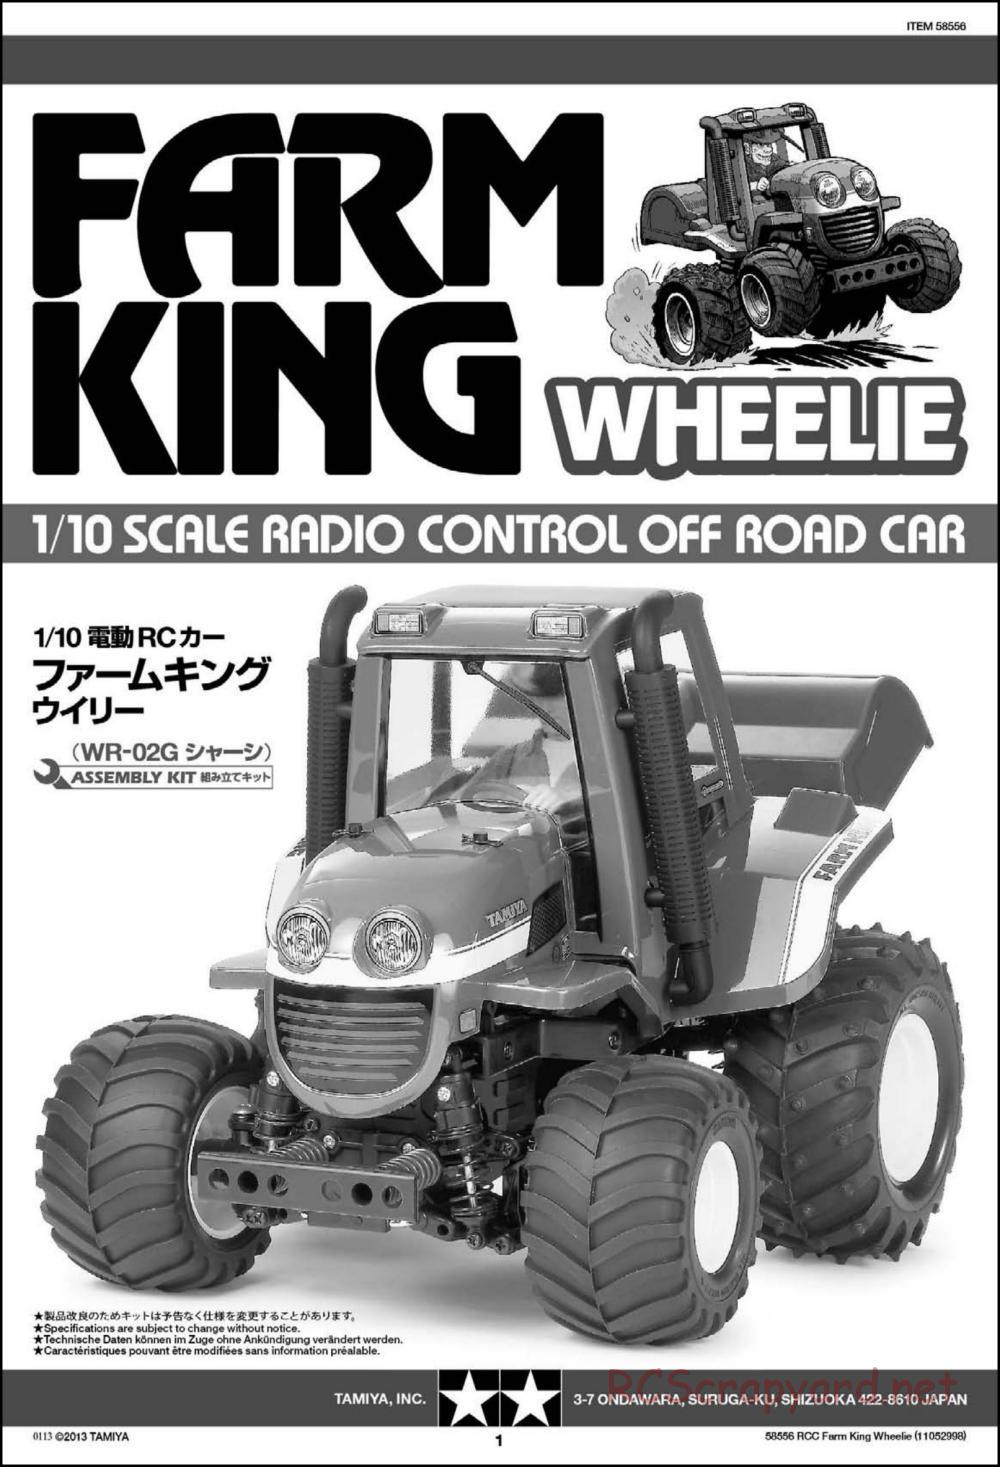 Tamiya - Farm King Wheelie Chassis - Manual - Page 1